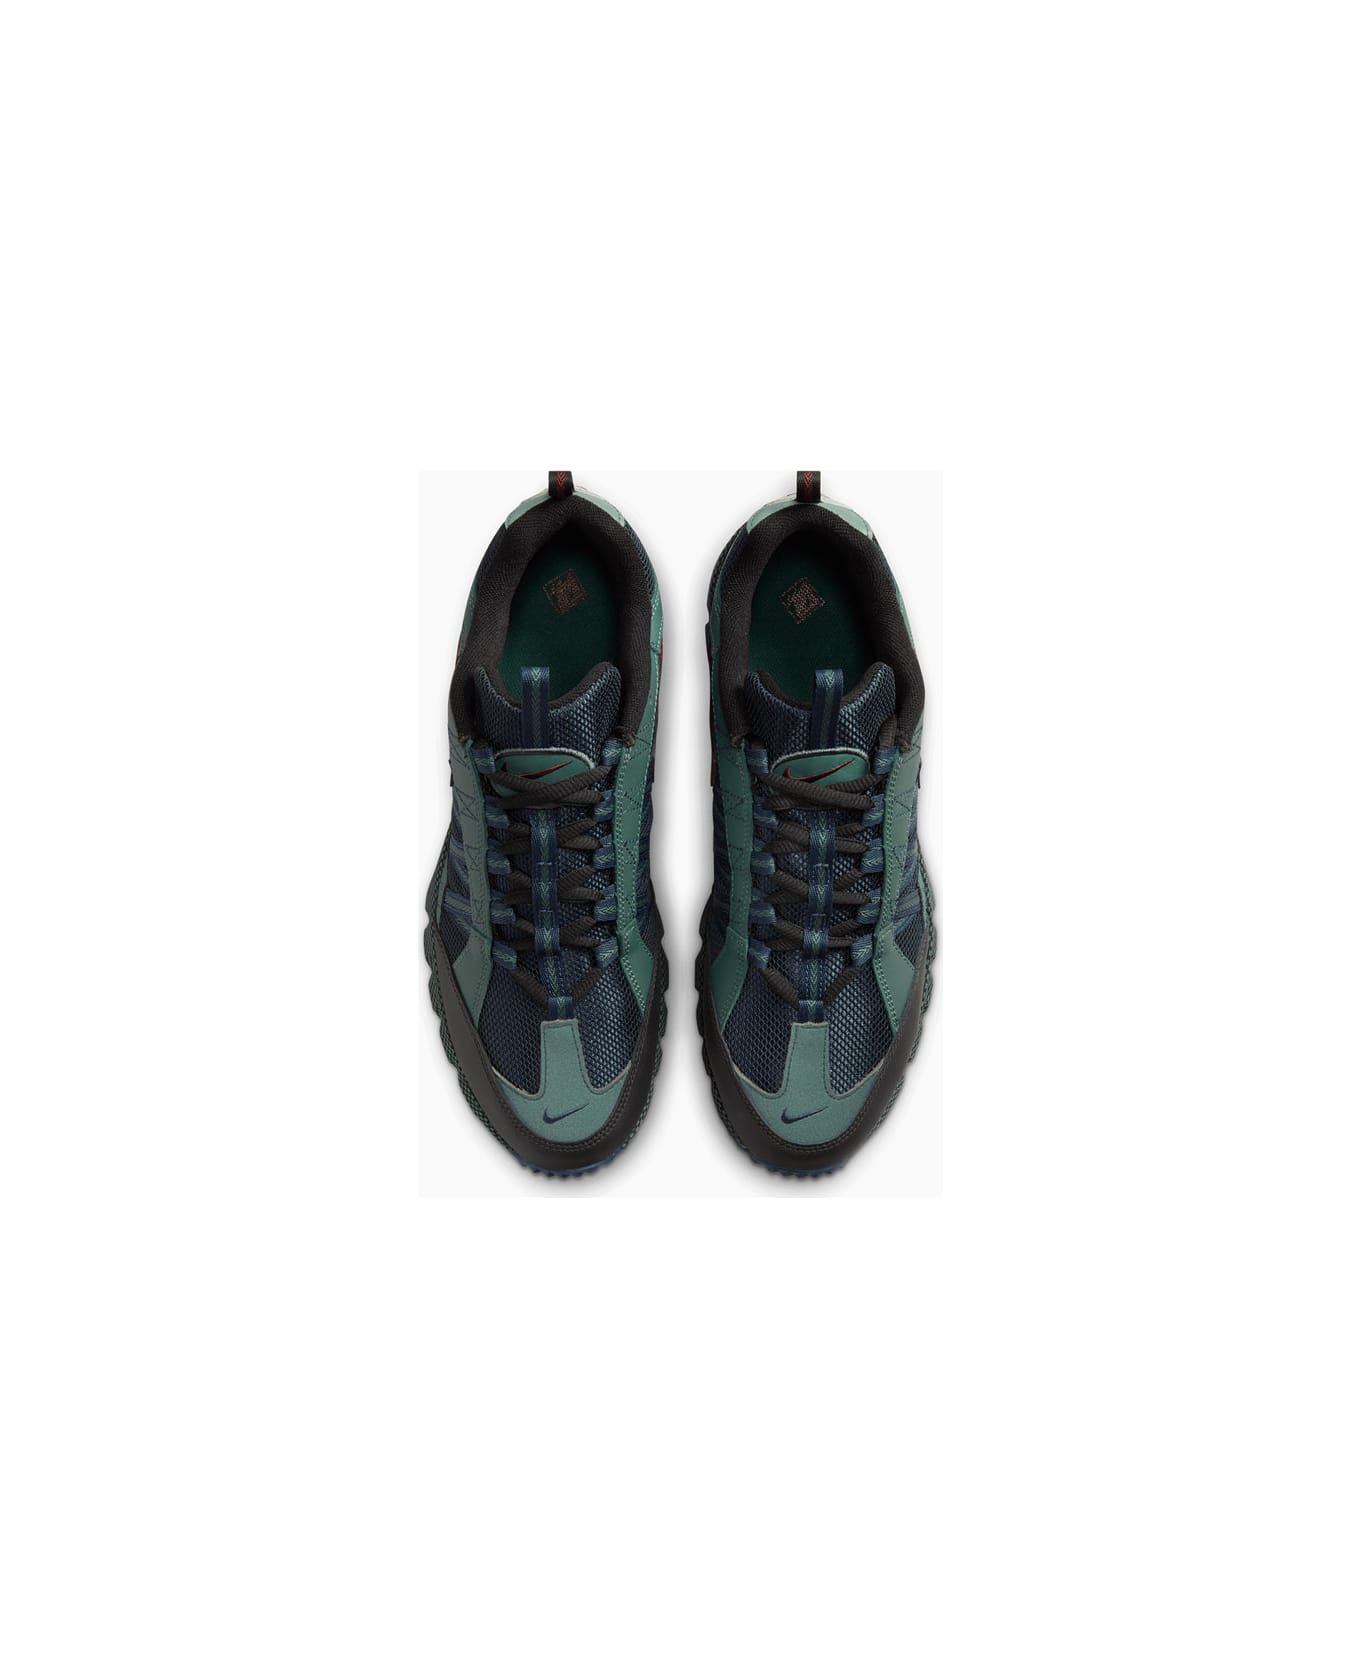 Nike Air Humara Qs Sneakers Fj7098-001 - Multiple colors スニーカー